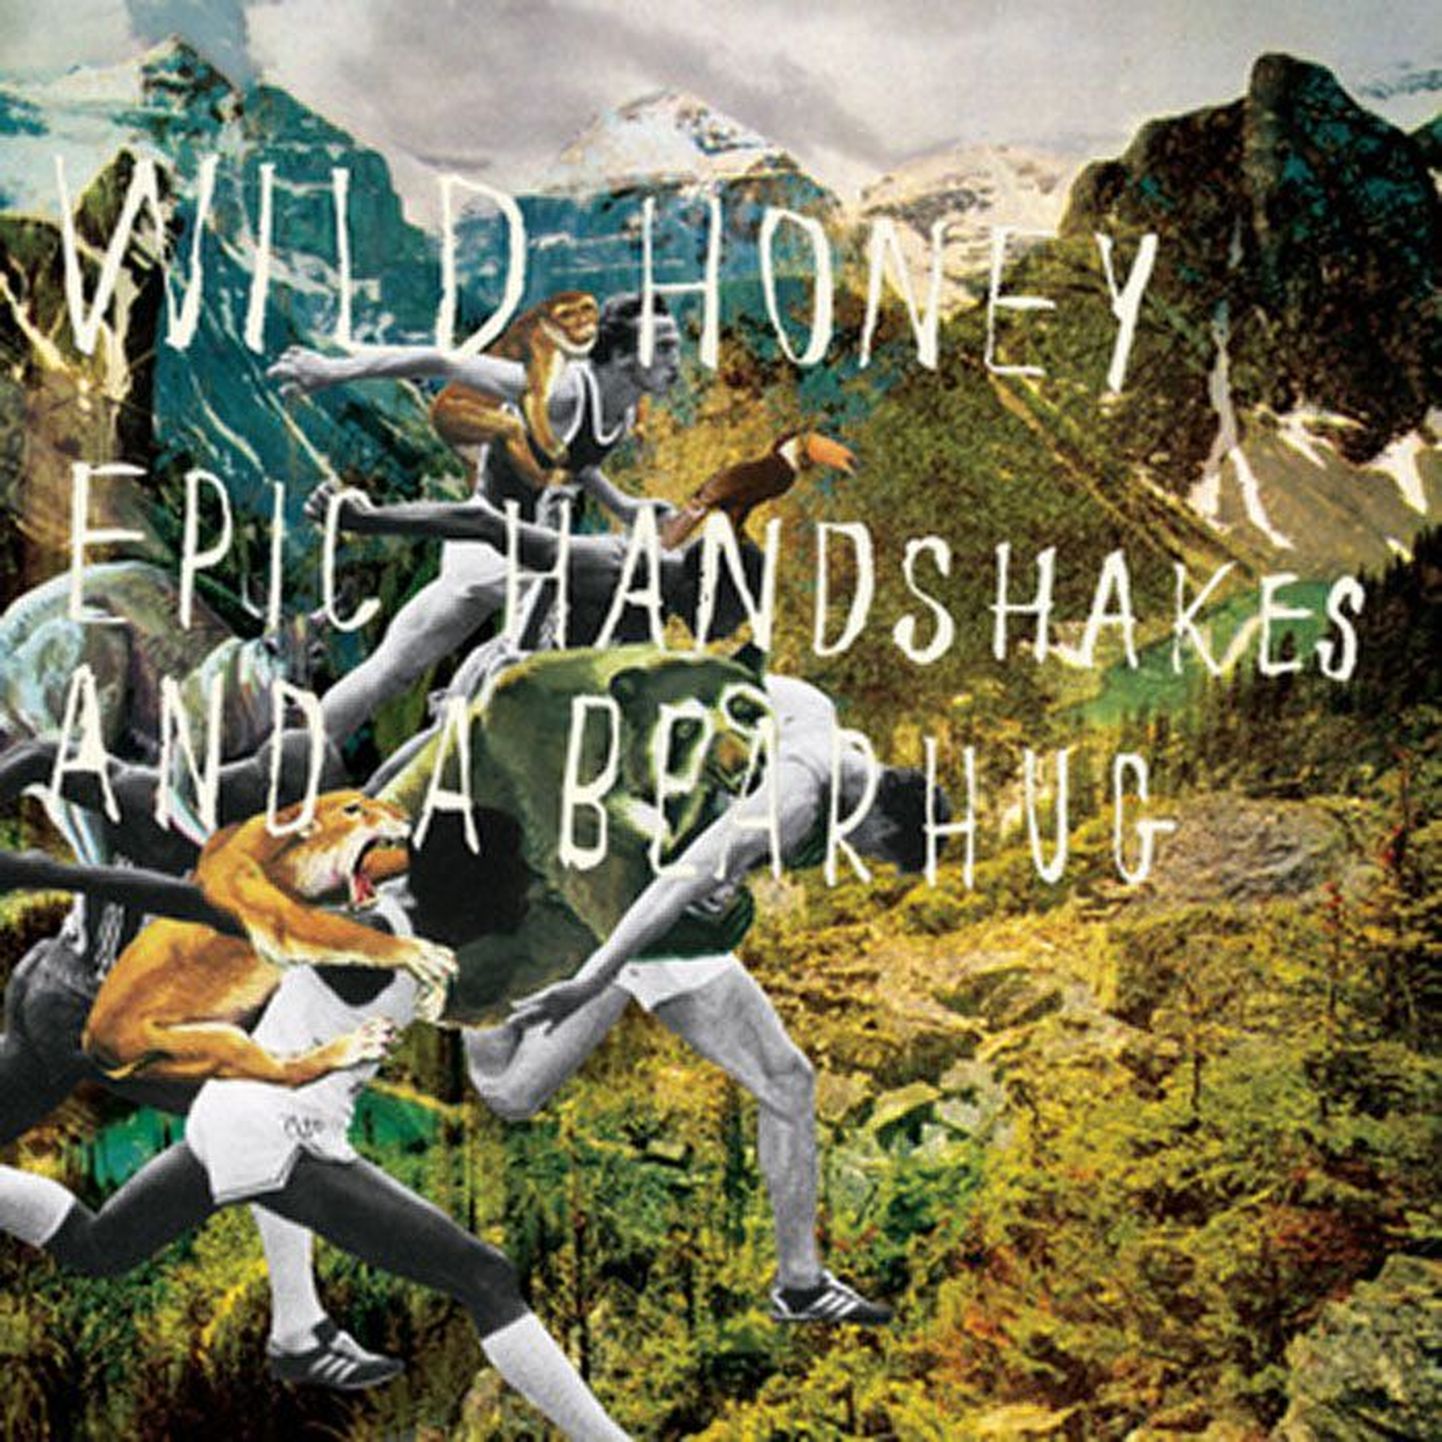 Wild Honey
Epic Handshakes And A Bear Hug (Lazy)